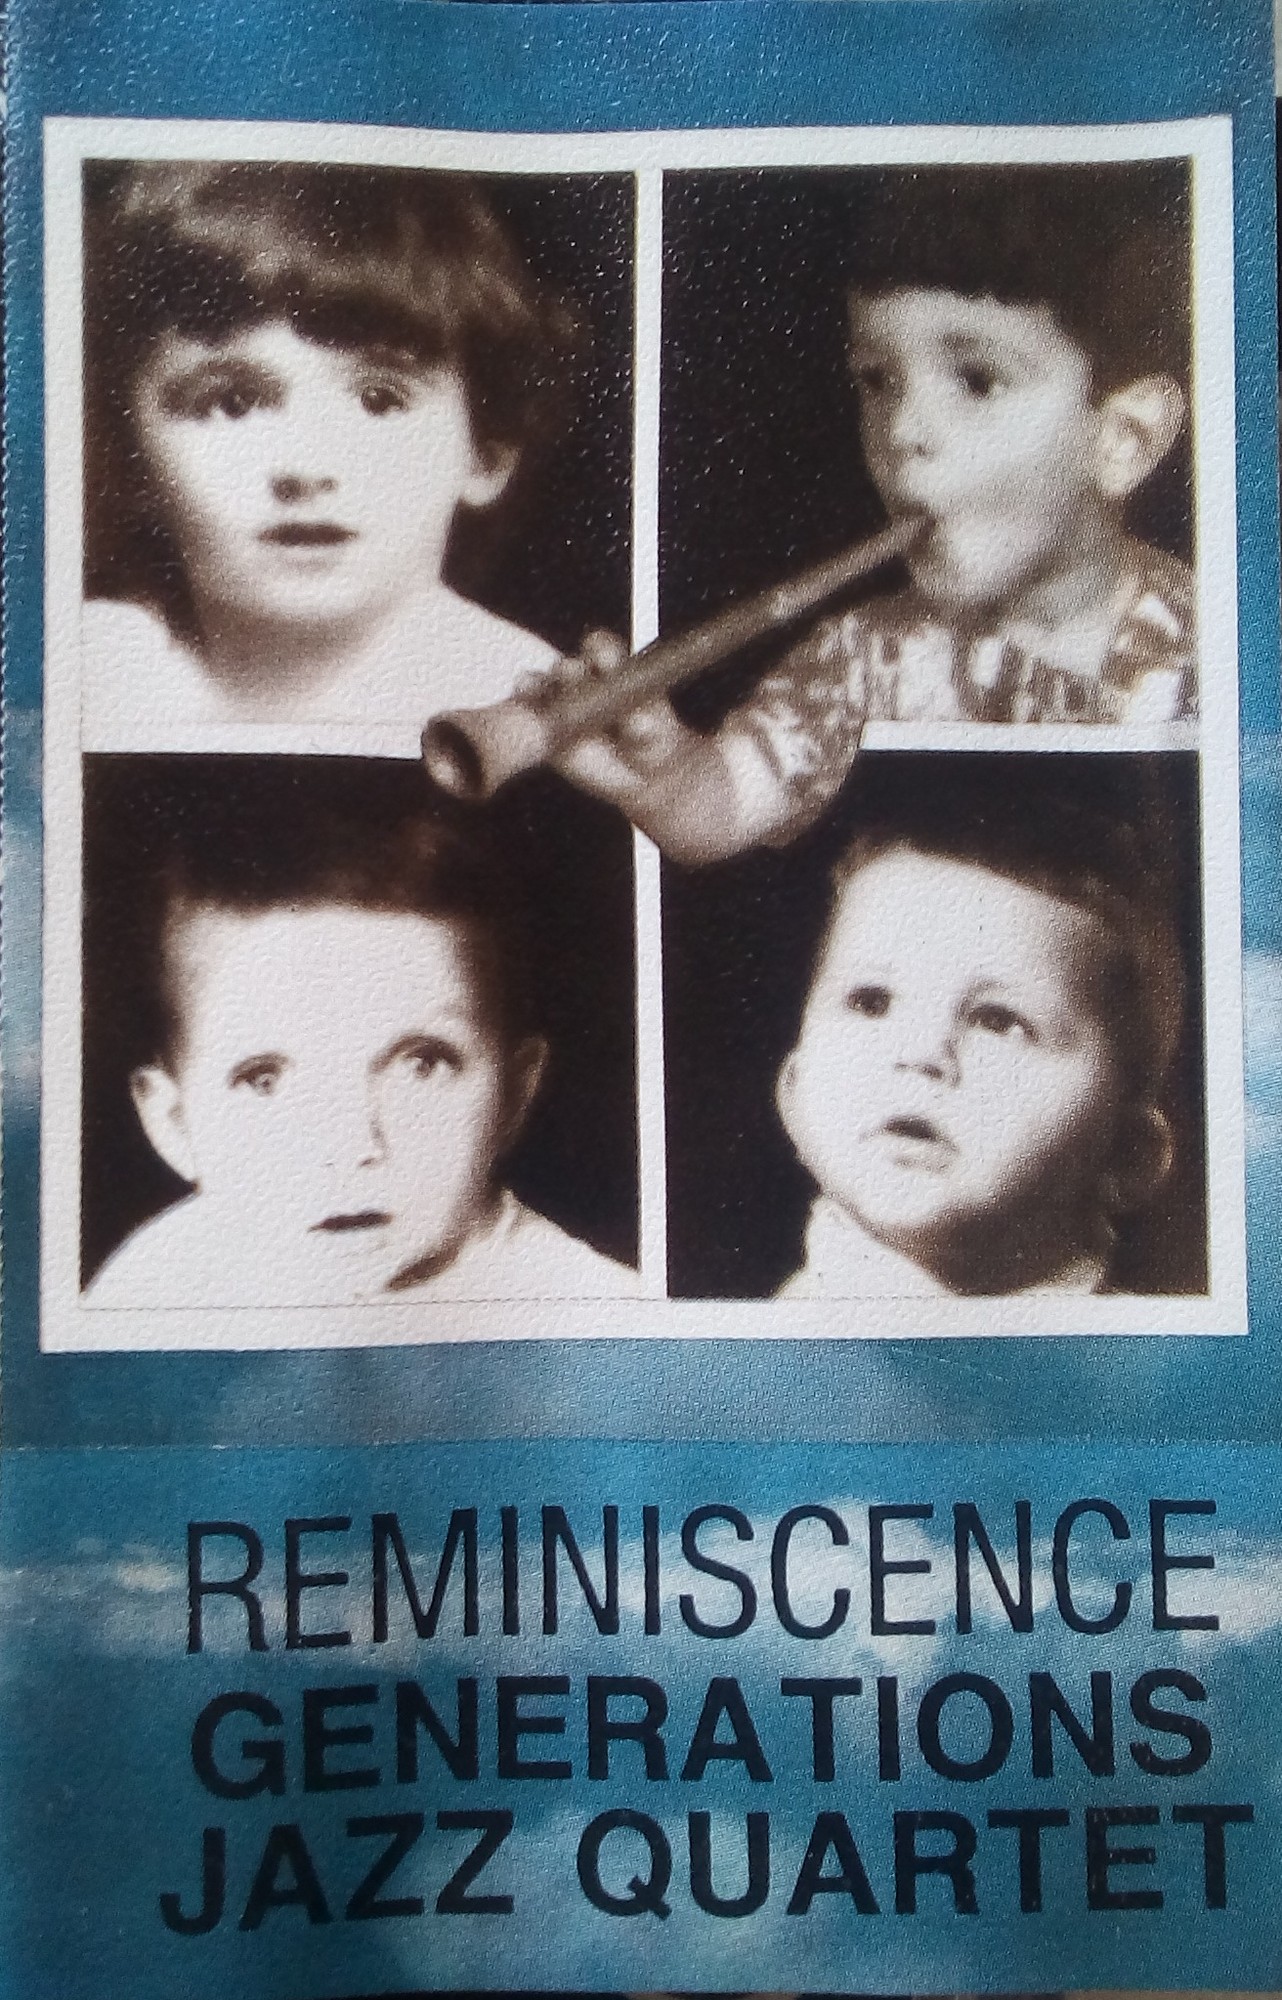 Reminiscence. "Generations" jazz quartet